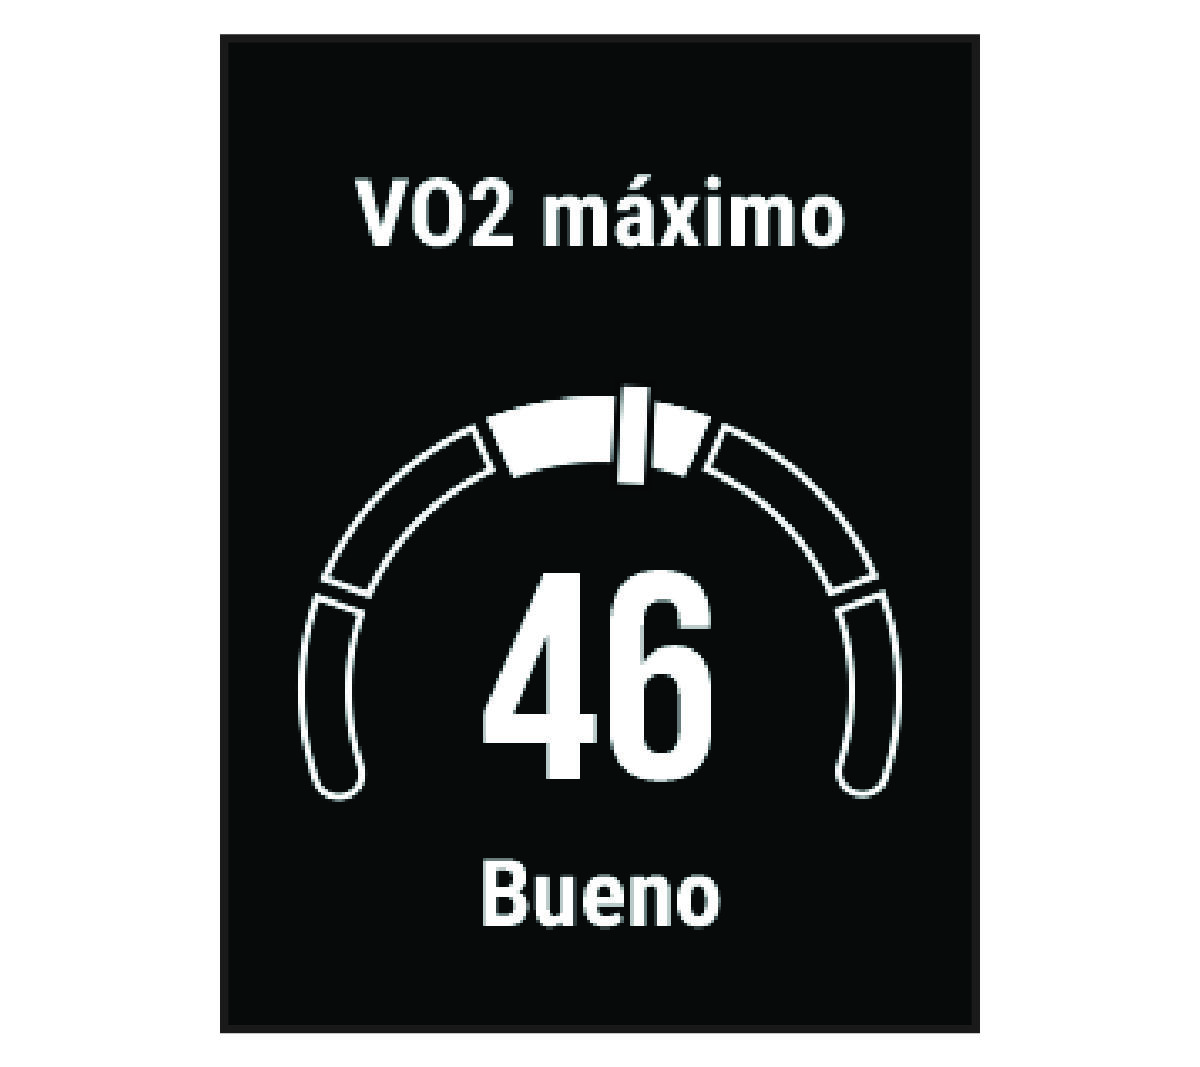 VO2 max. data